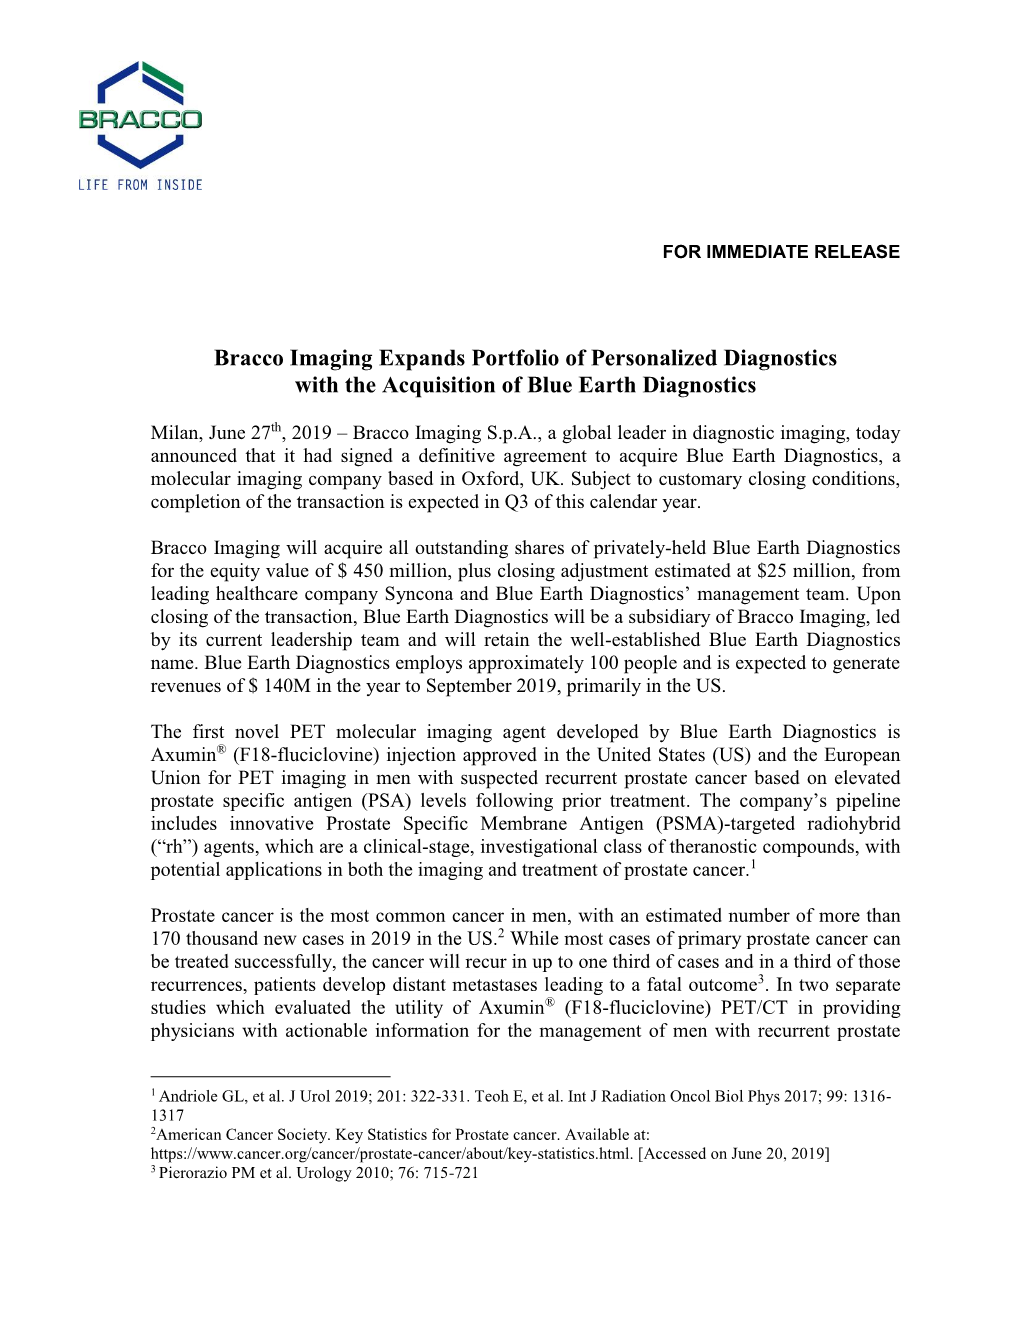 Bracco Imaging Expands Portfolio of Personalized Diagnostics with the Acquisition of Blue Earth Diagnostics